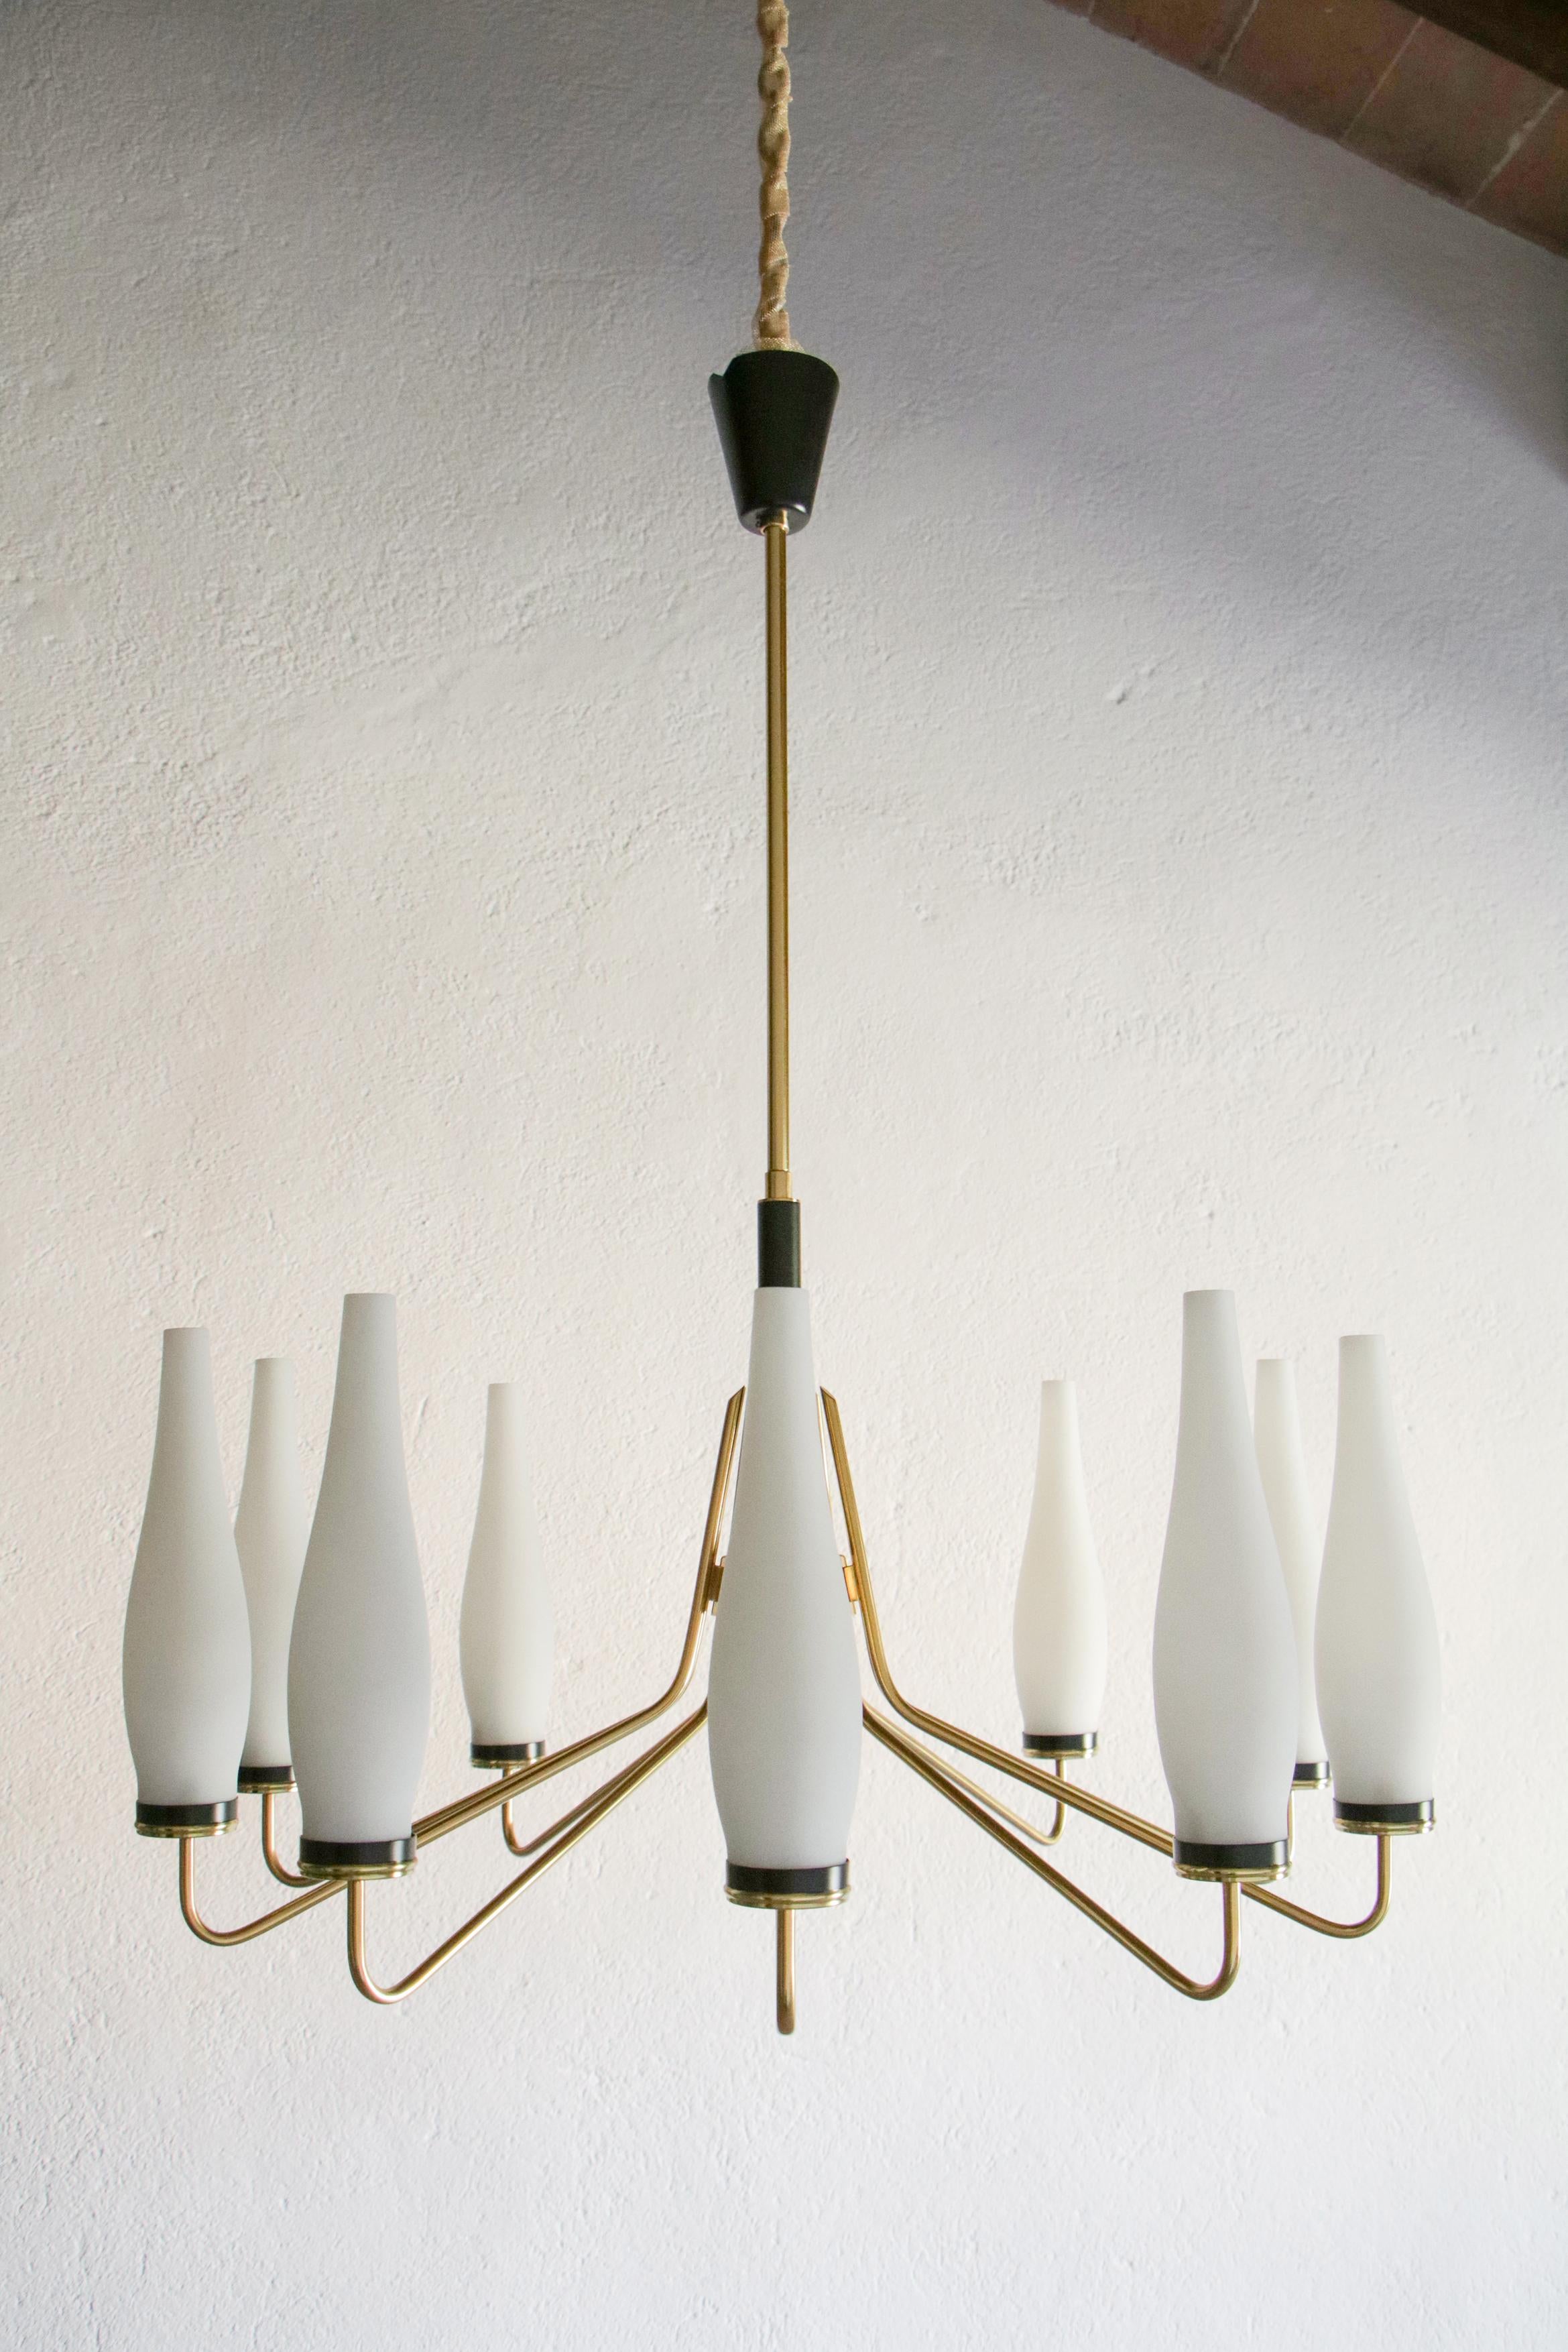 Italian Mid-Century Modern Ten Lights Chandelier Attributer to Stilnovo, 1950s For Sale 6